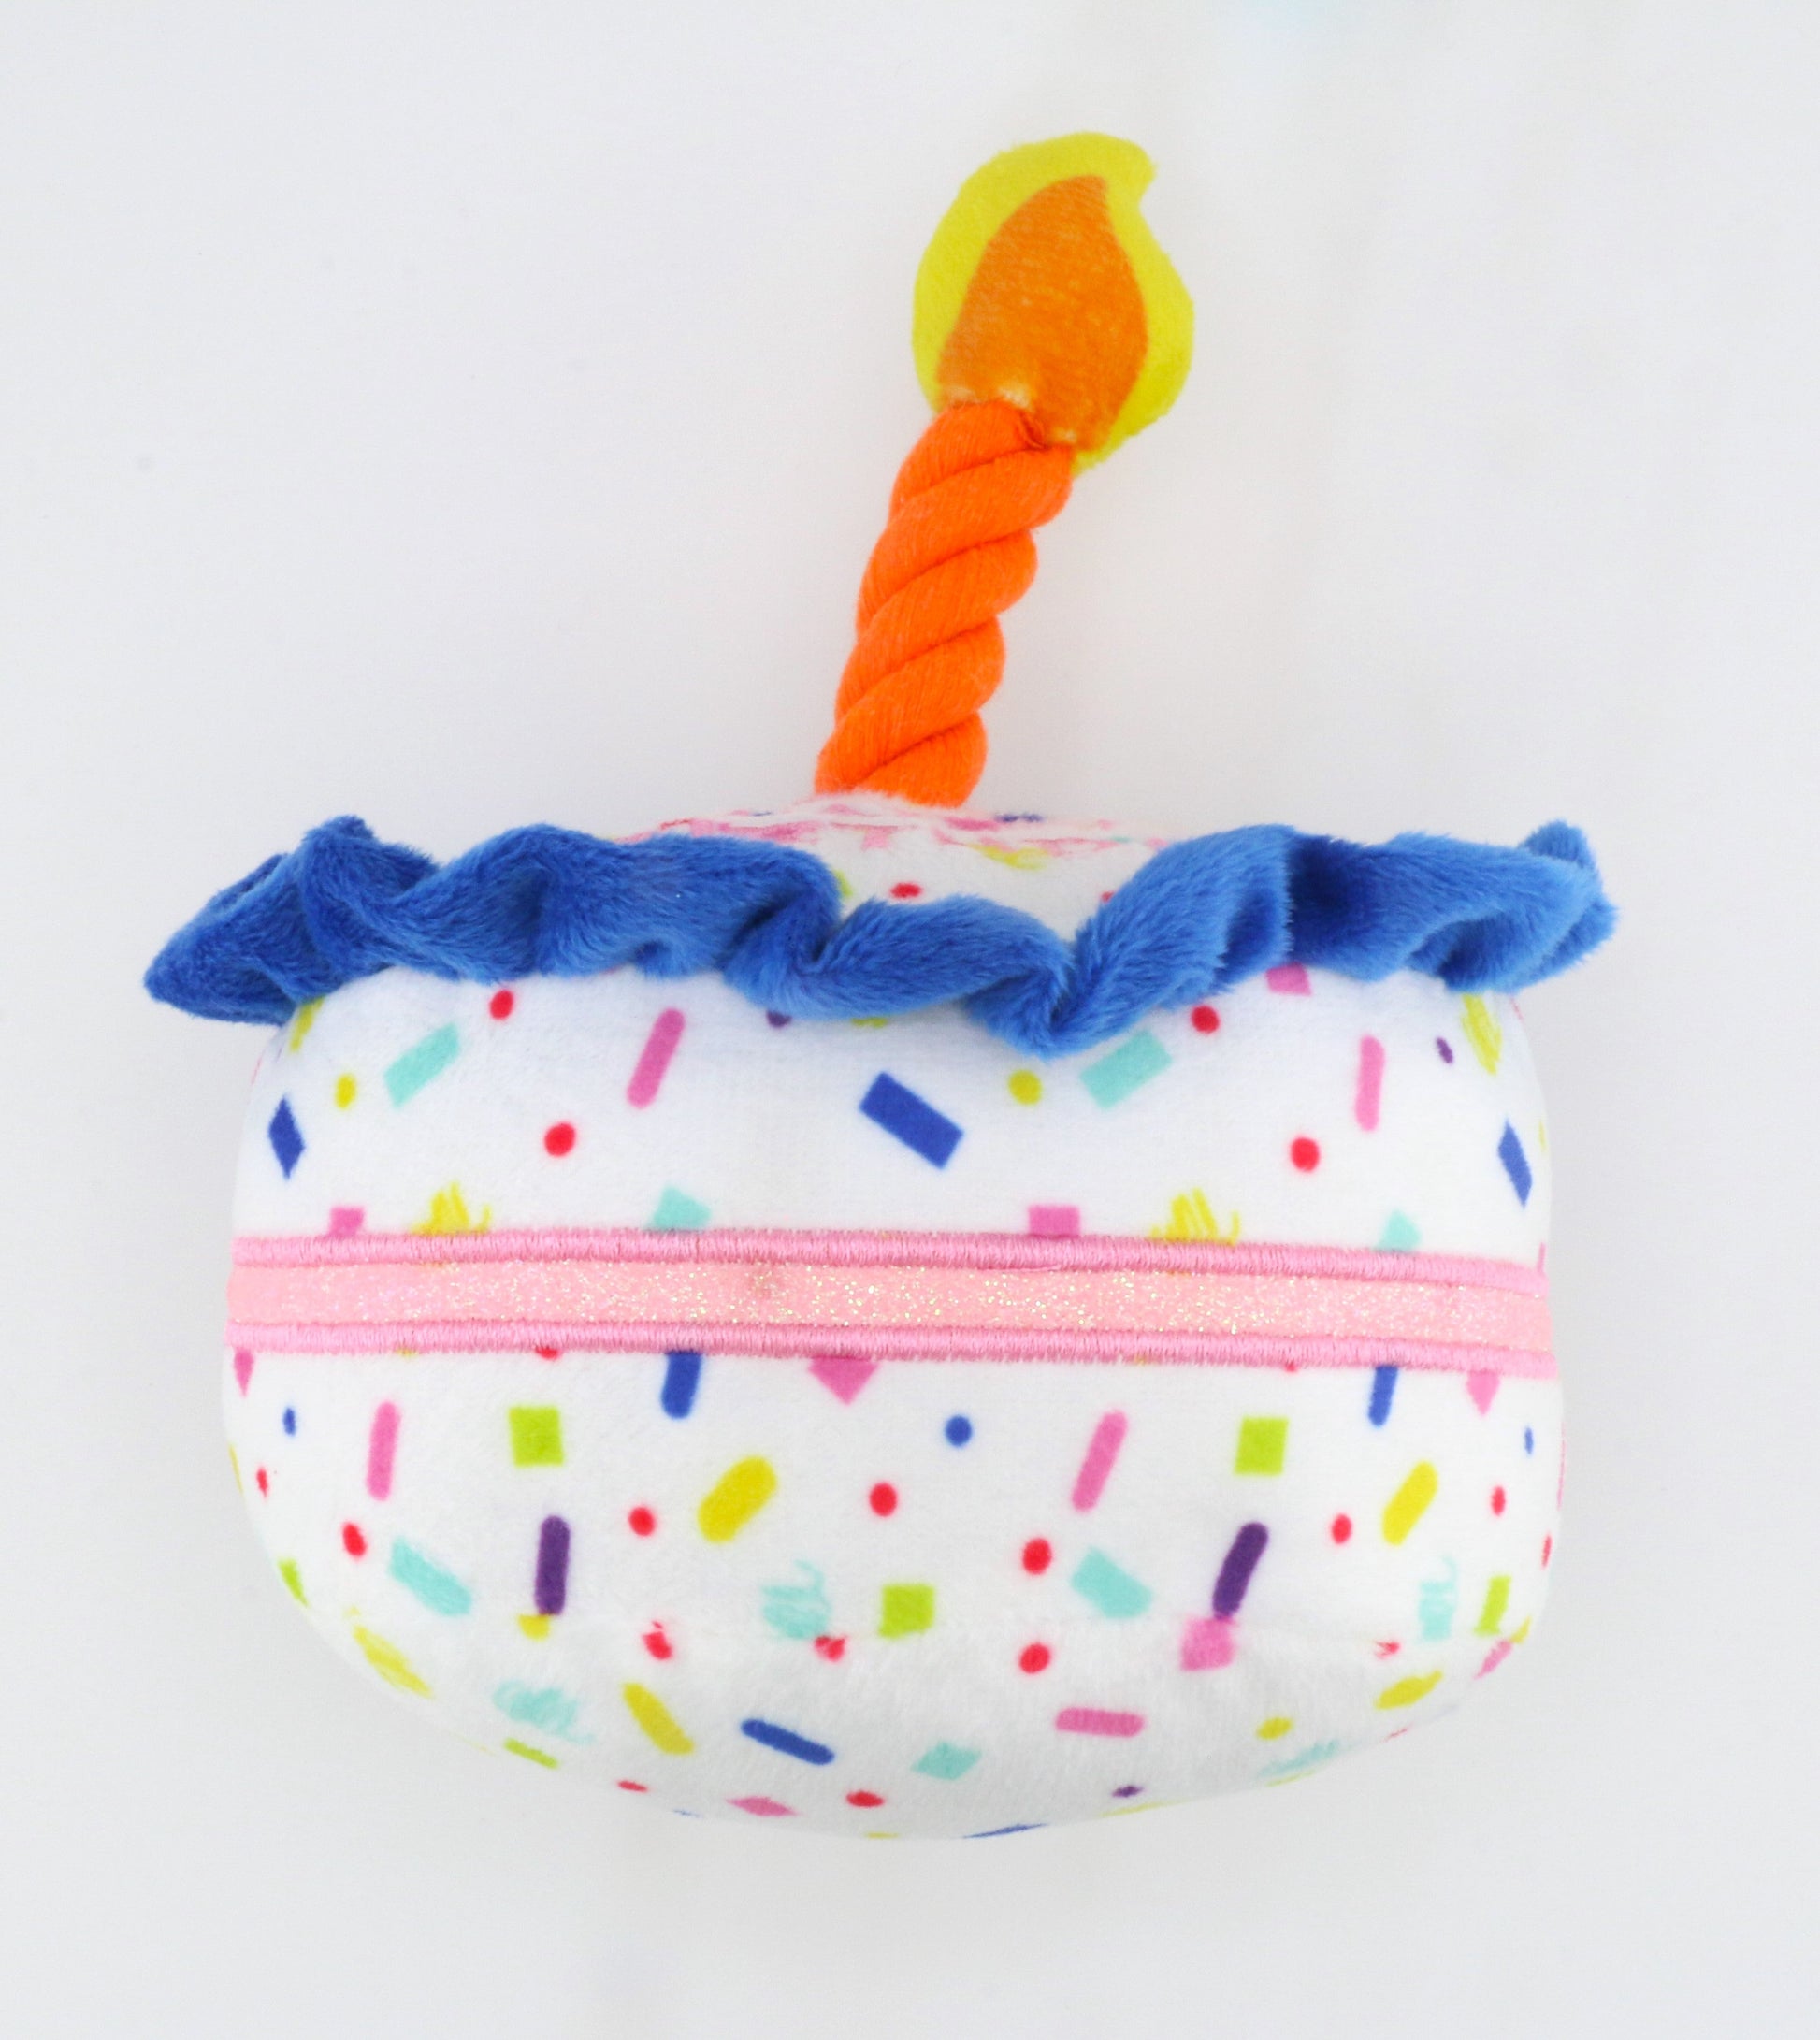 Happy Birthday Cake Toy - LunaMarie